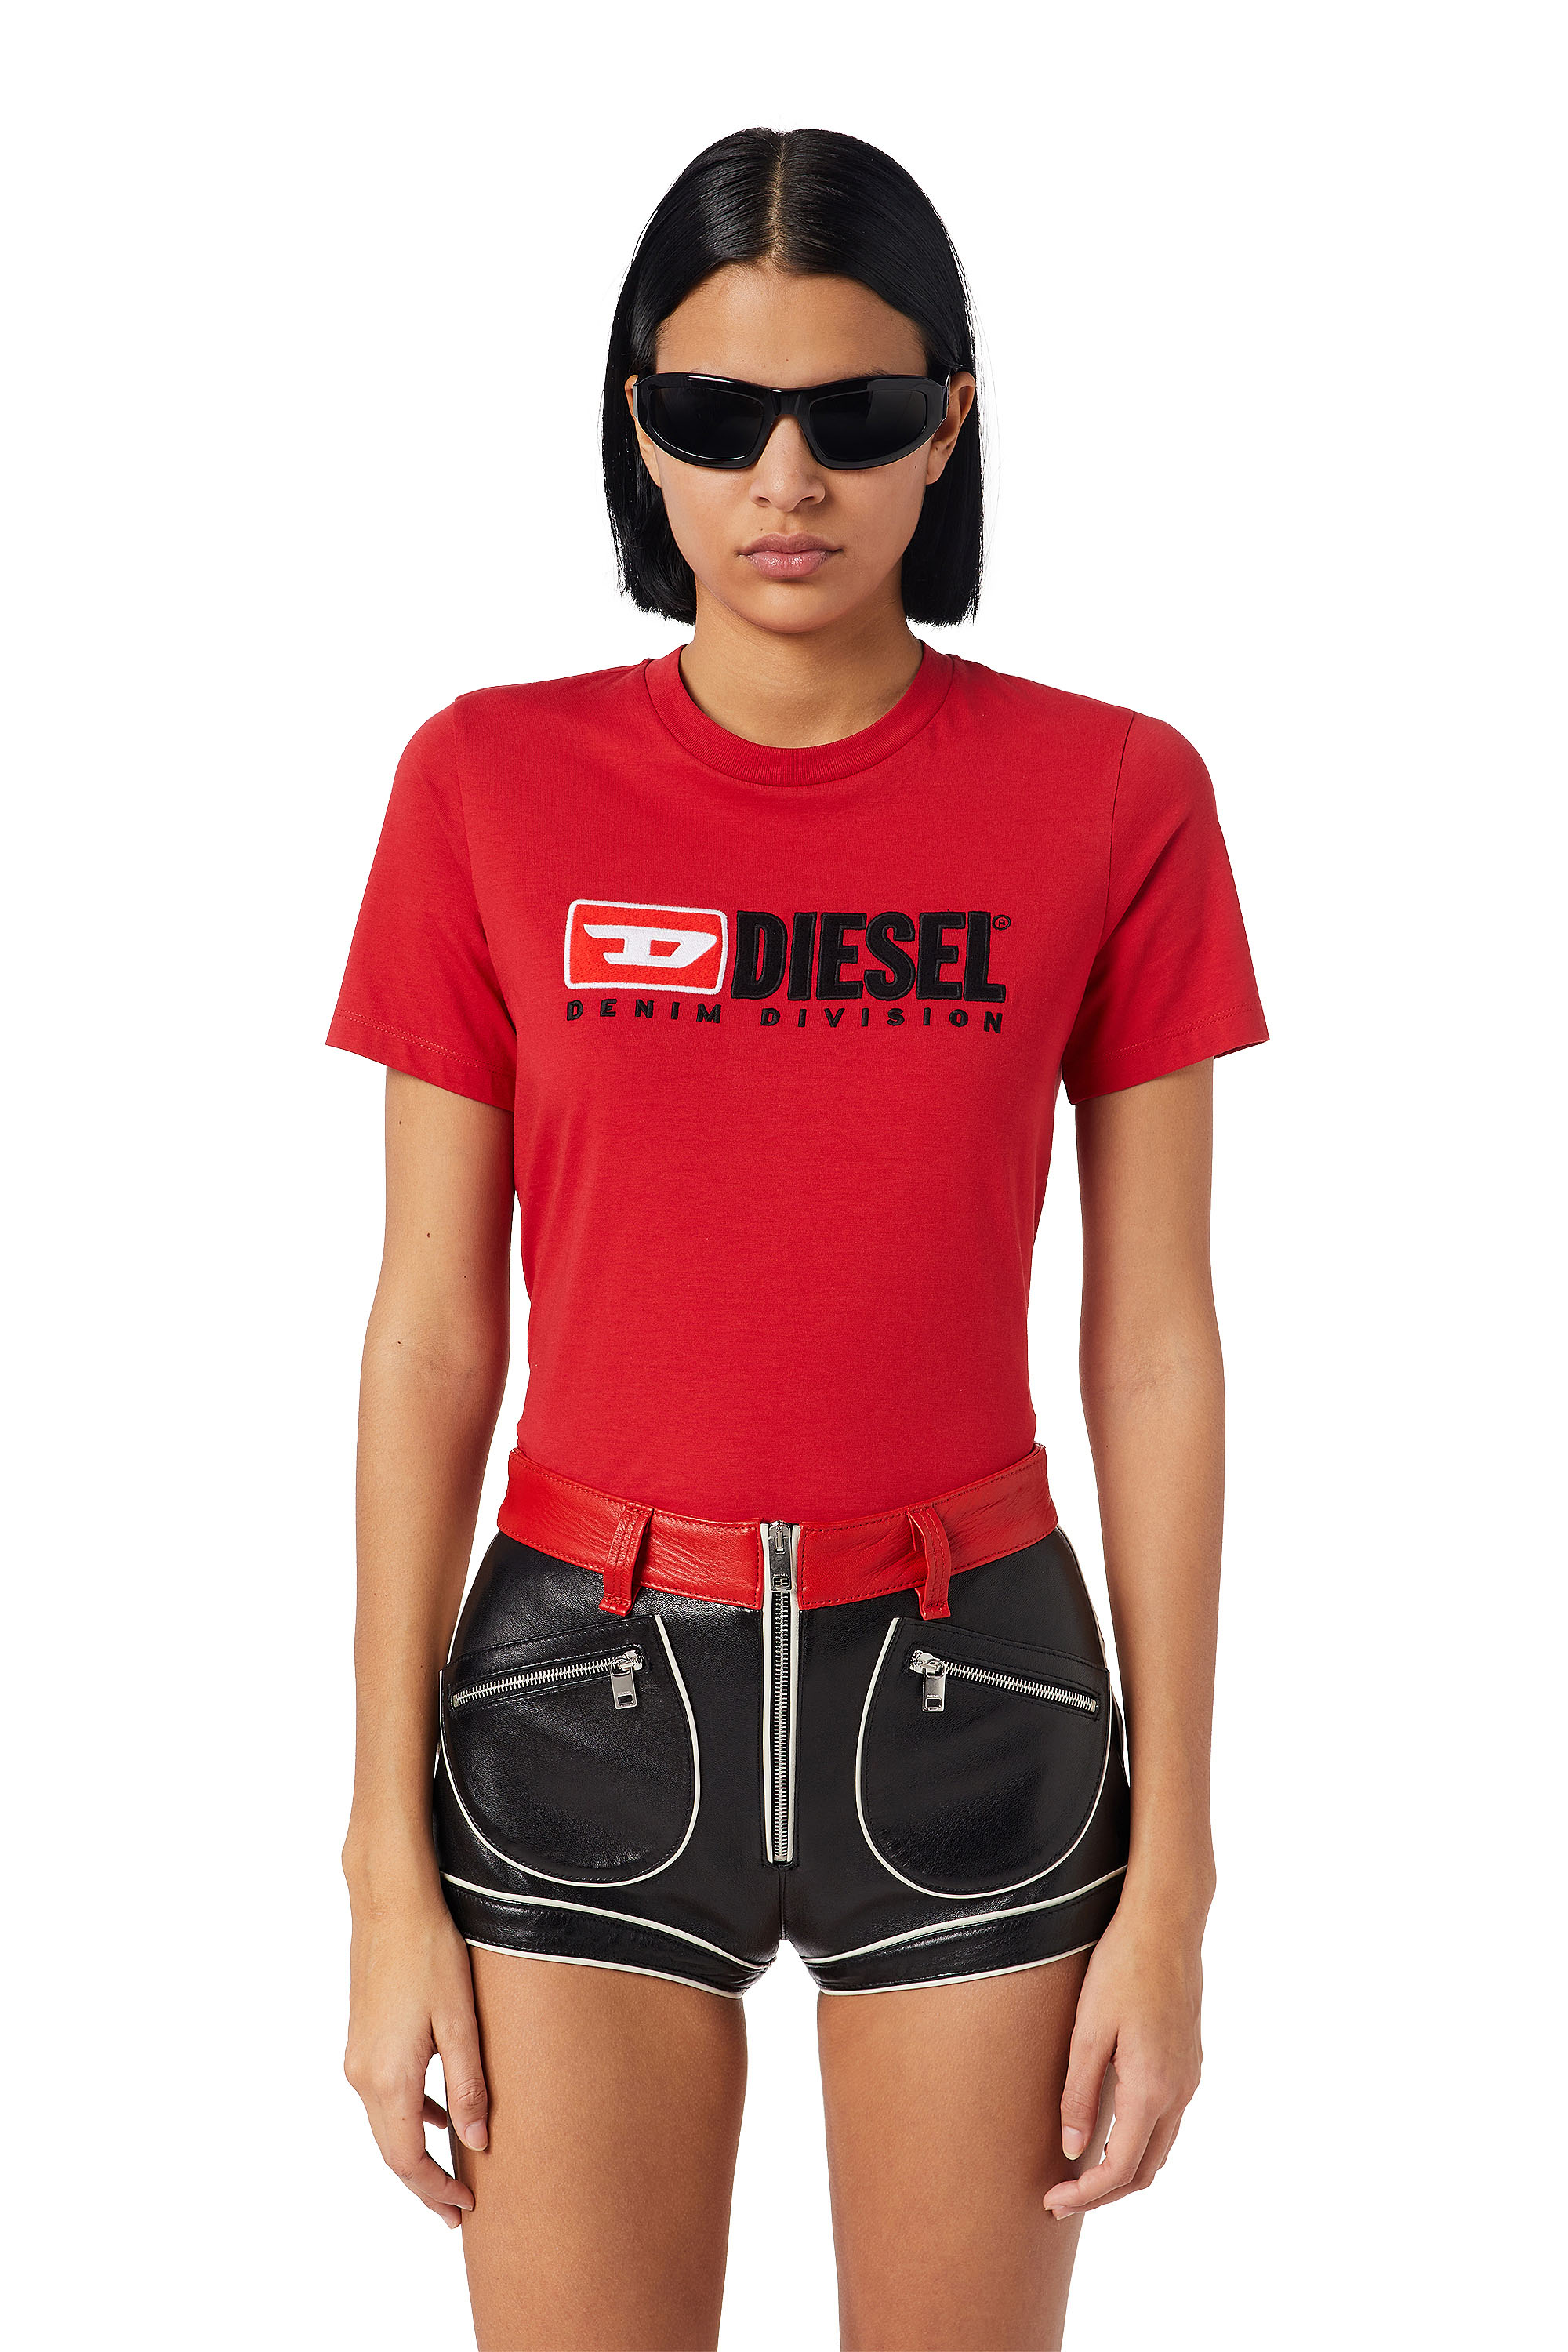 Diesel - T-REG-DIV, Rojo - Image 1